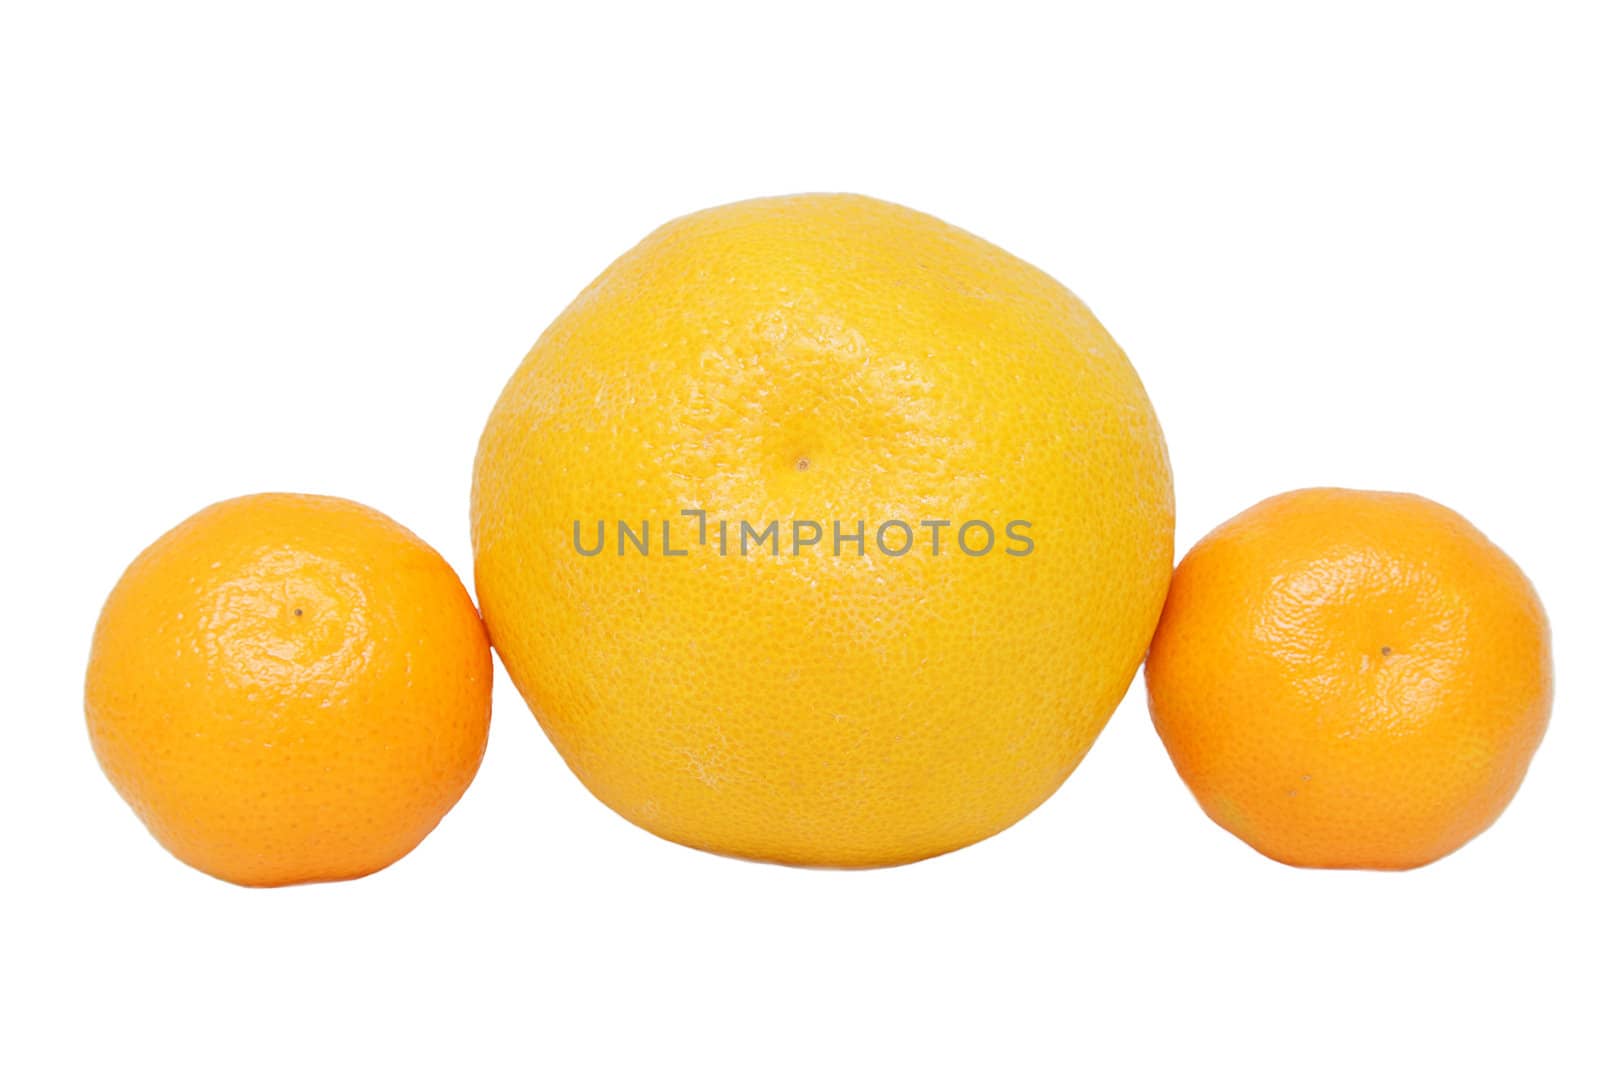 Orange and mandarins by pulen